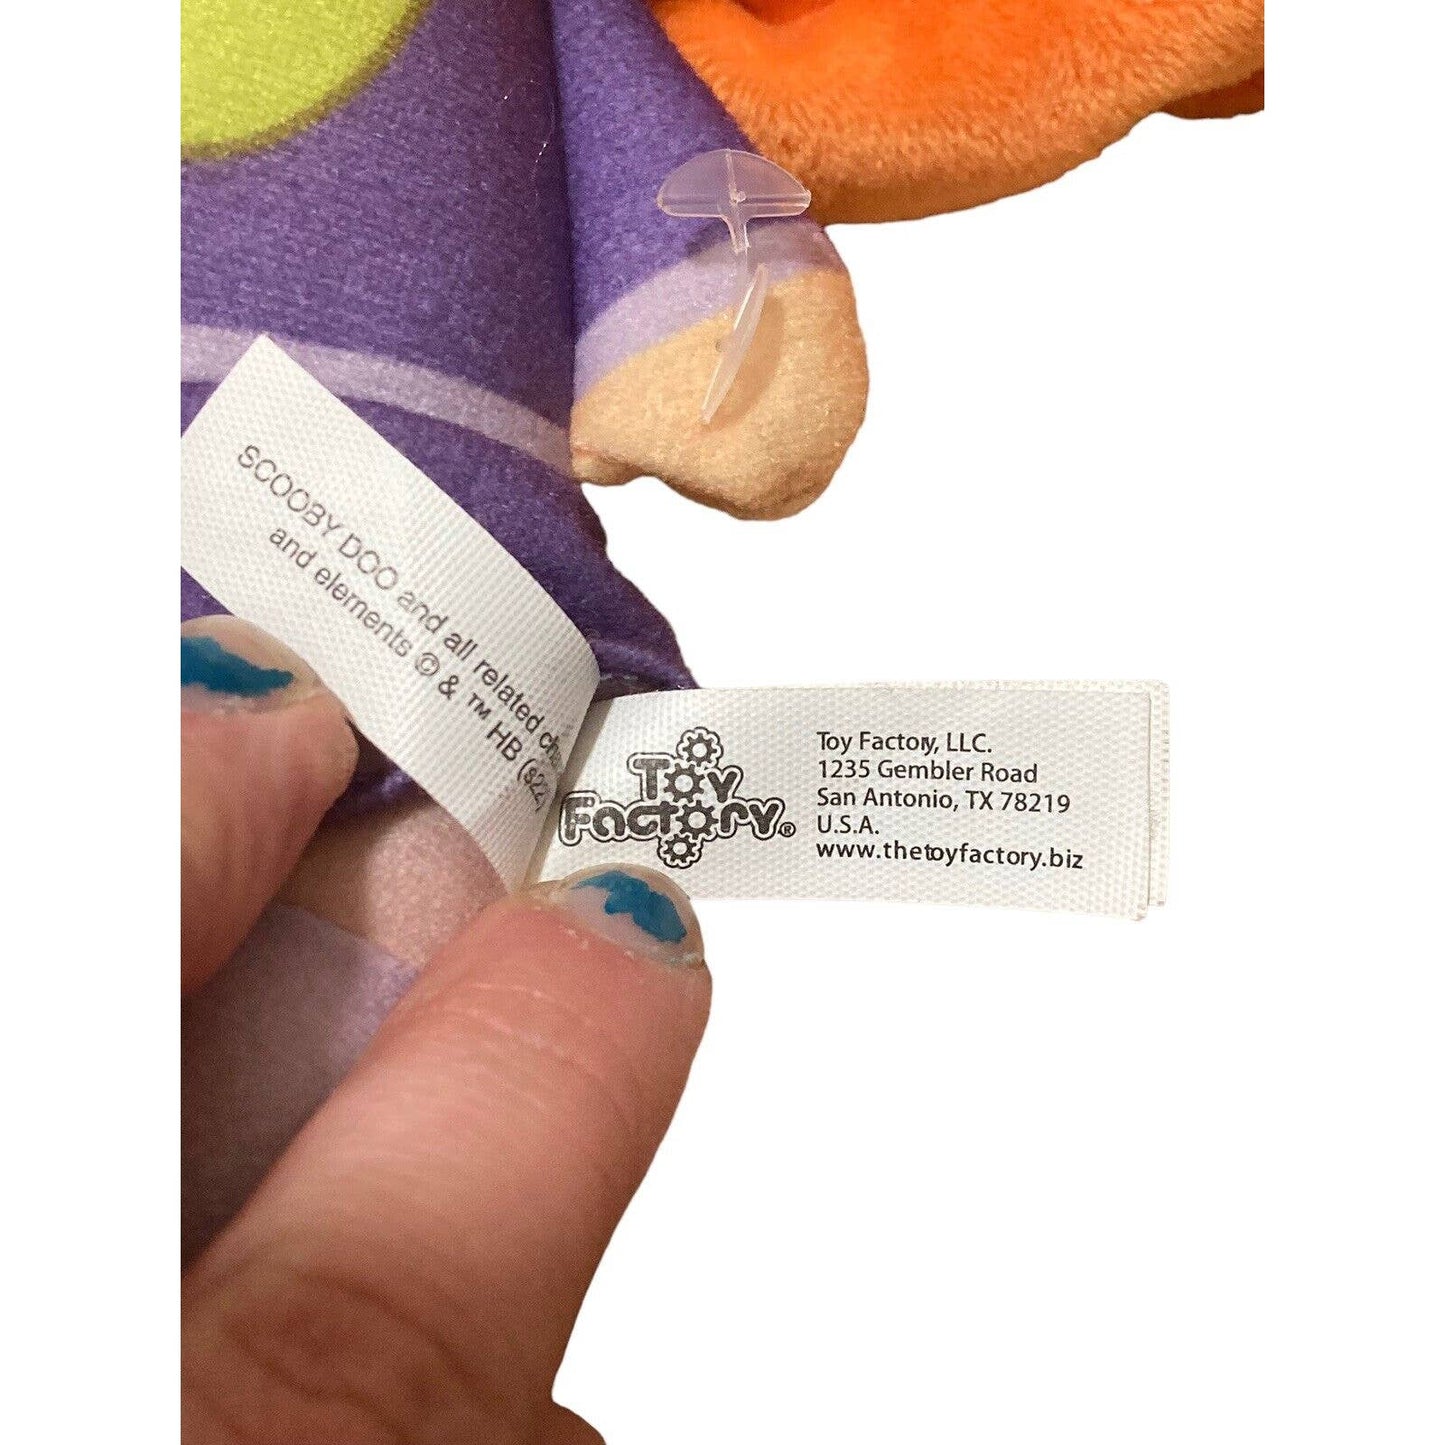 Toy Factory Scooby Doo Chibi Daphne Stuffed Plush Doll Toy 9”